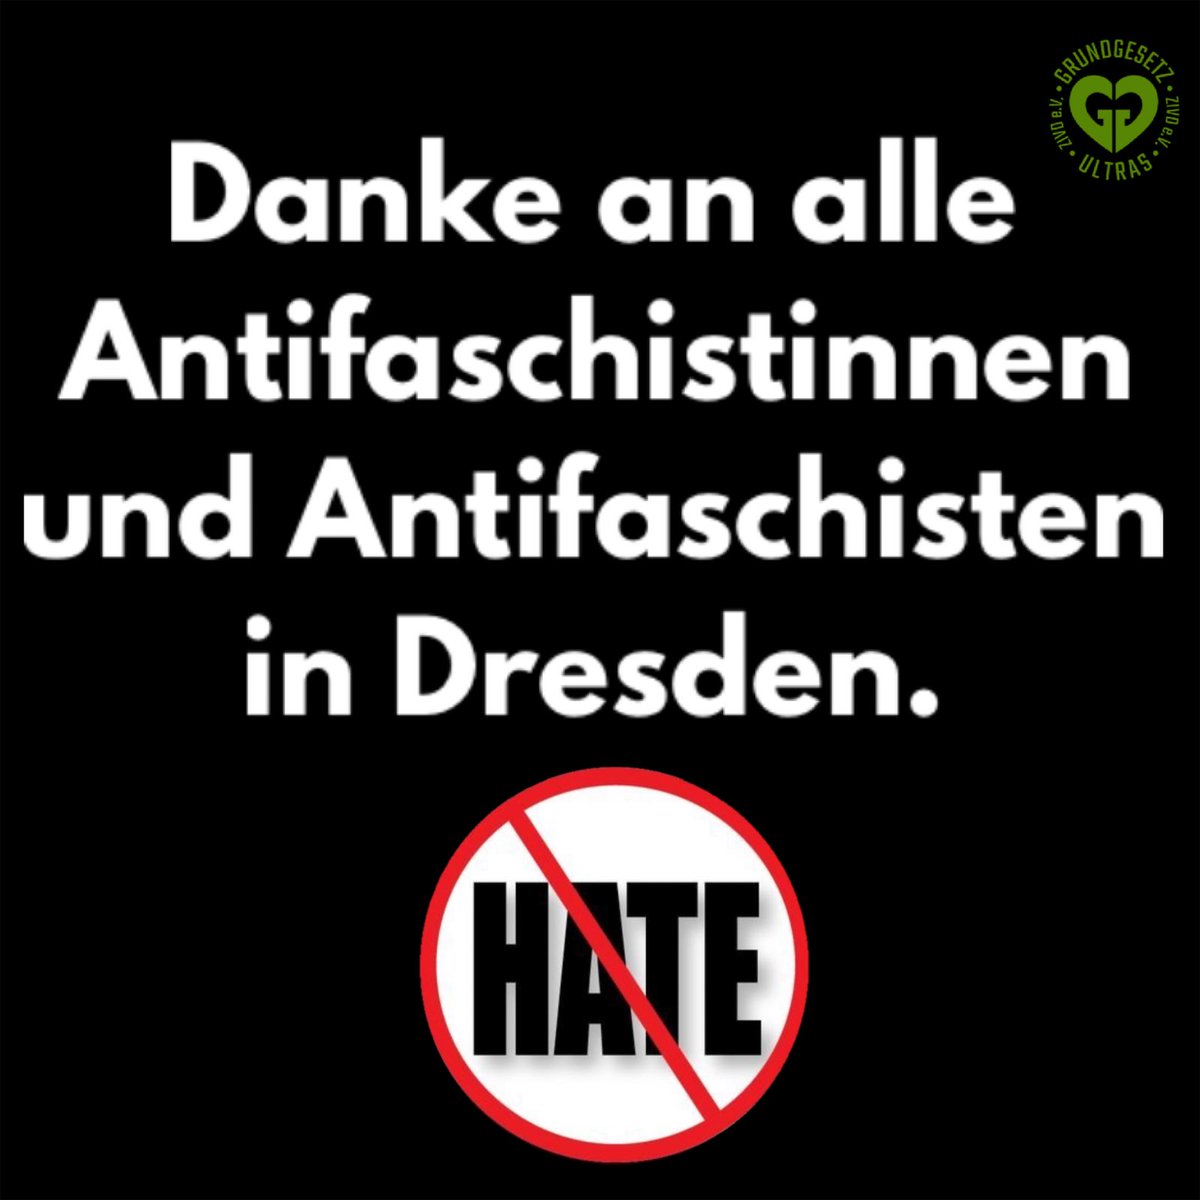 Danke 💚 #dd1702 #NazisStören #NoPegidaDD #Höckelos #DresdenGehtUnsAlleAn #GGUltras